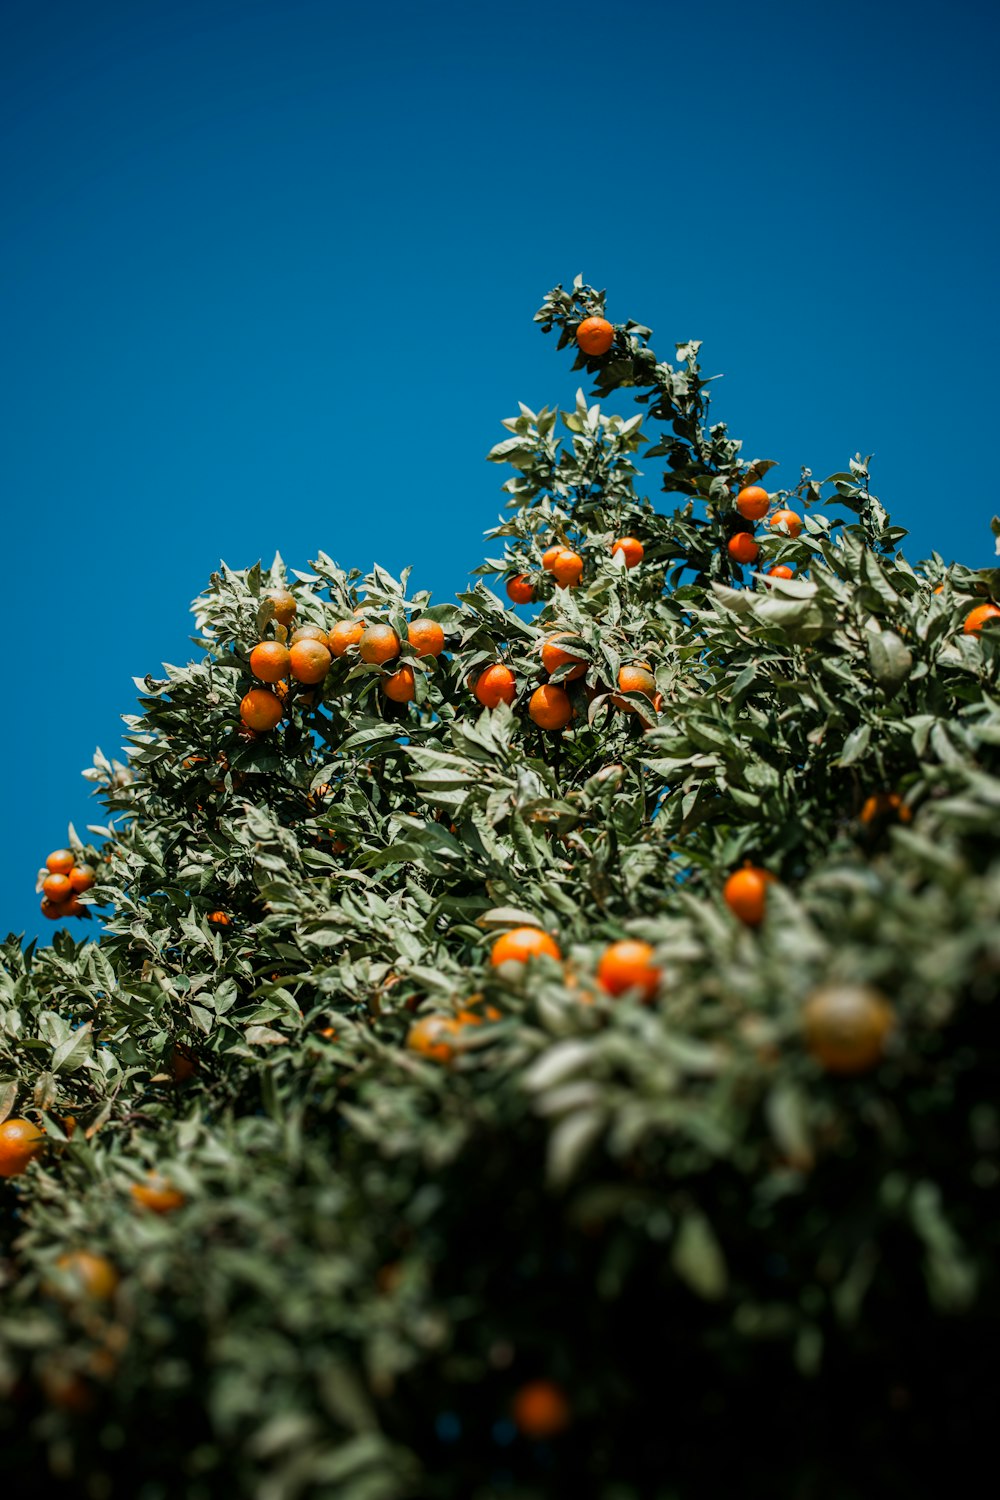 orange fruits on green grass during daytime